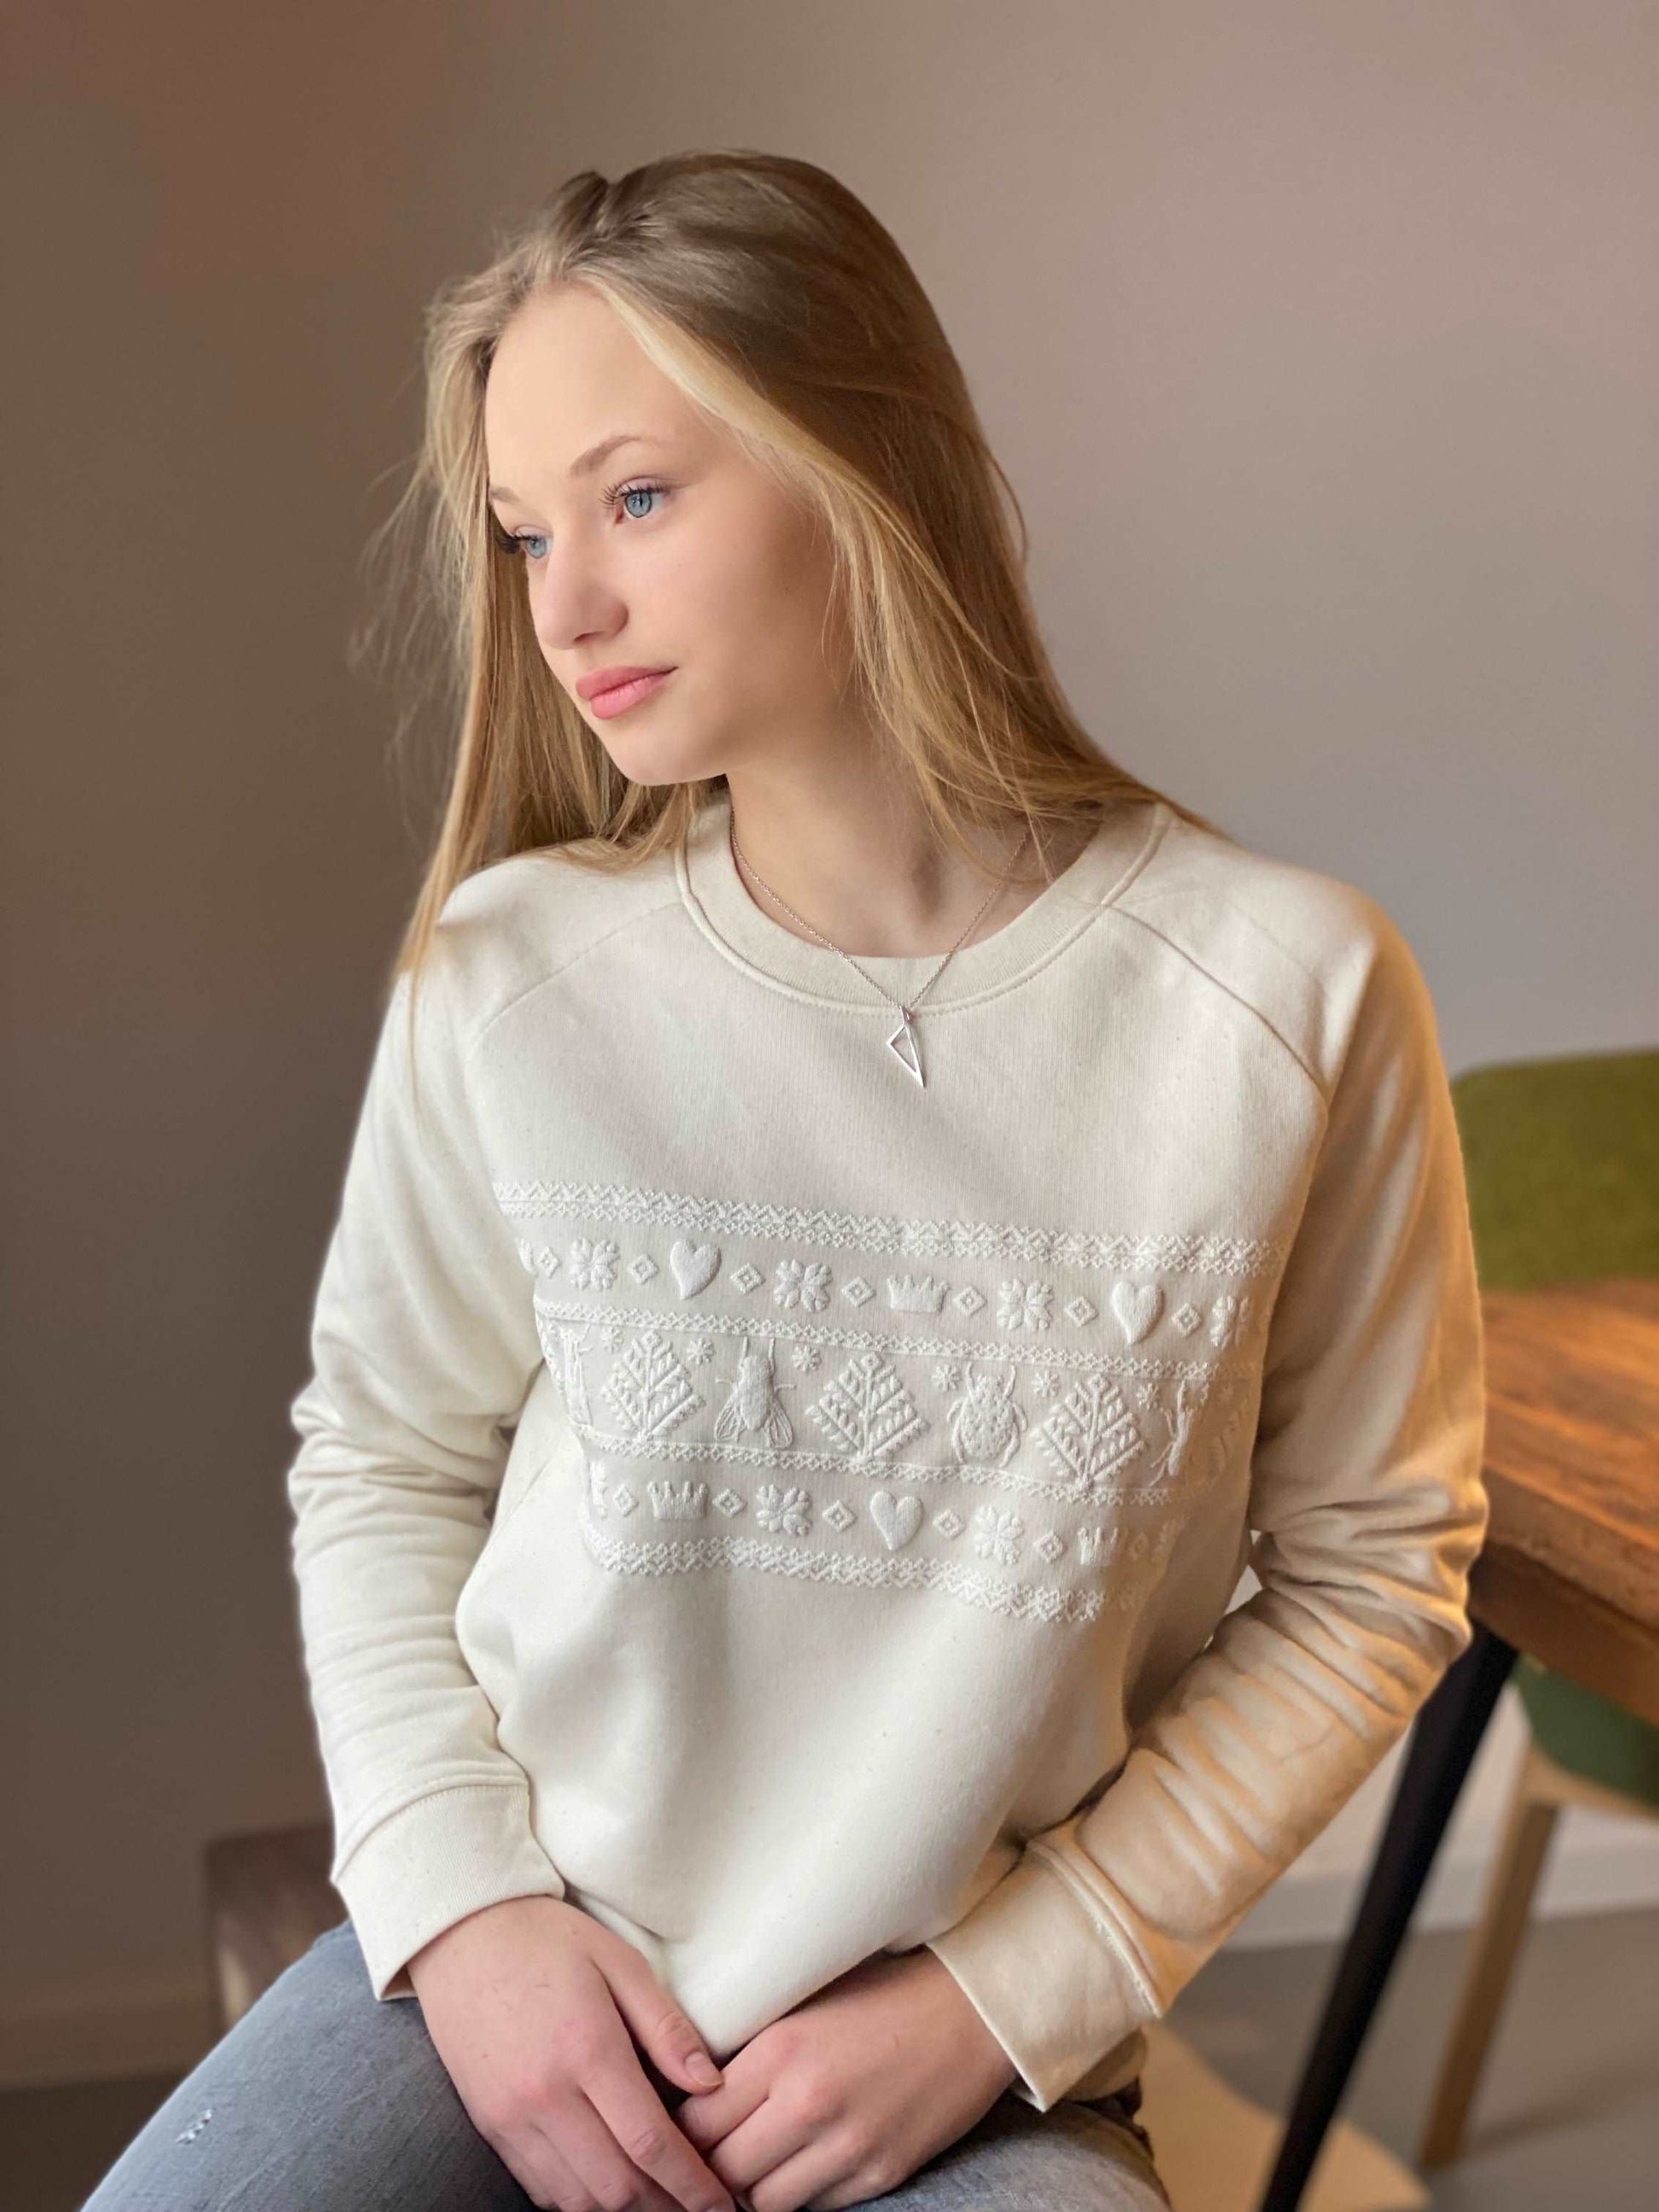 Pulover z norveškim vzorcem - ženski model